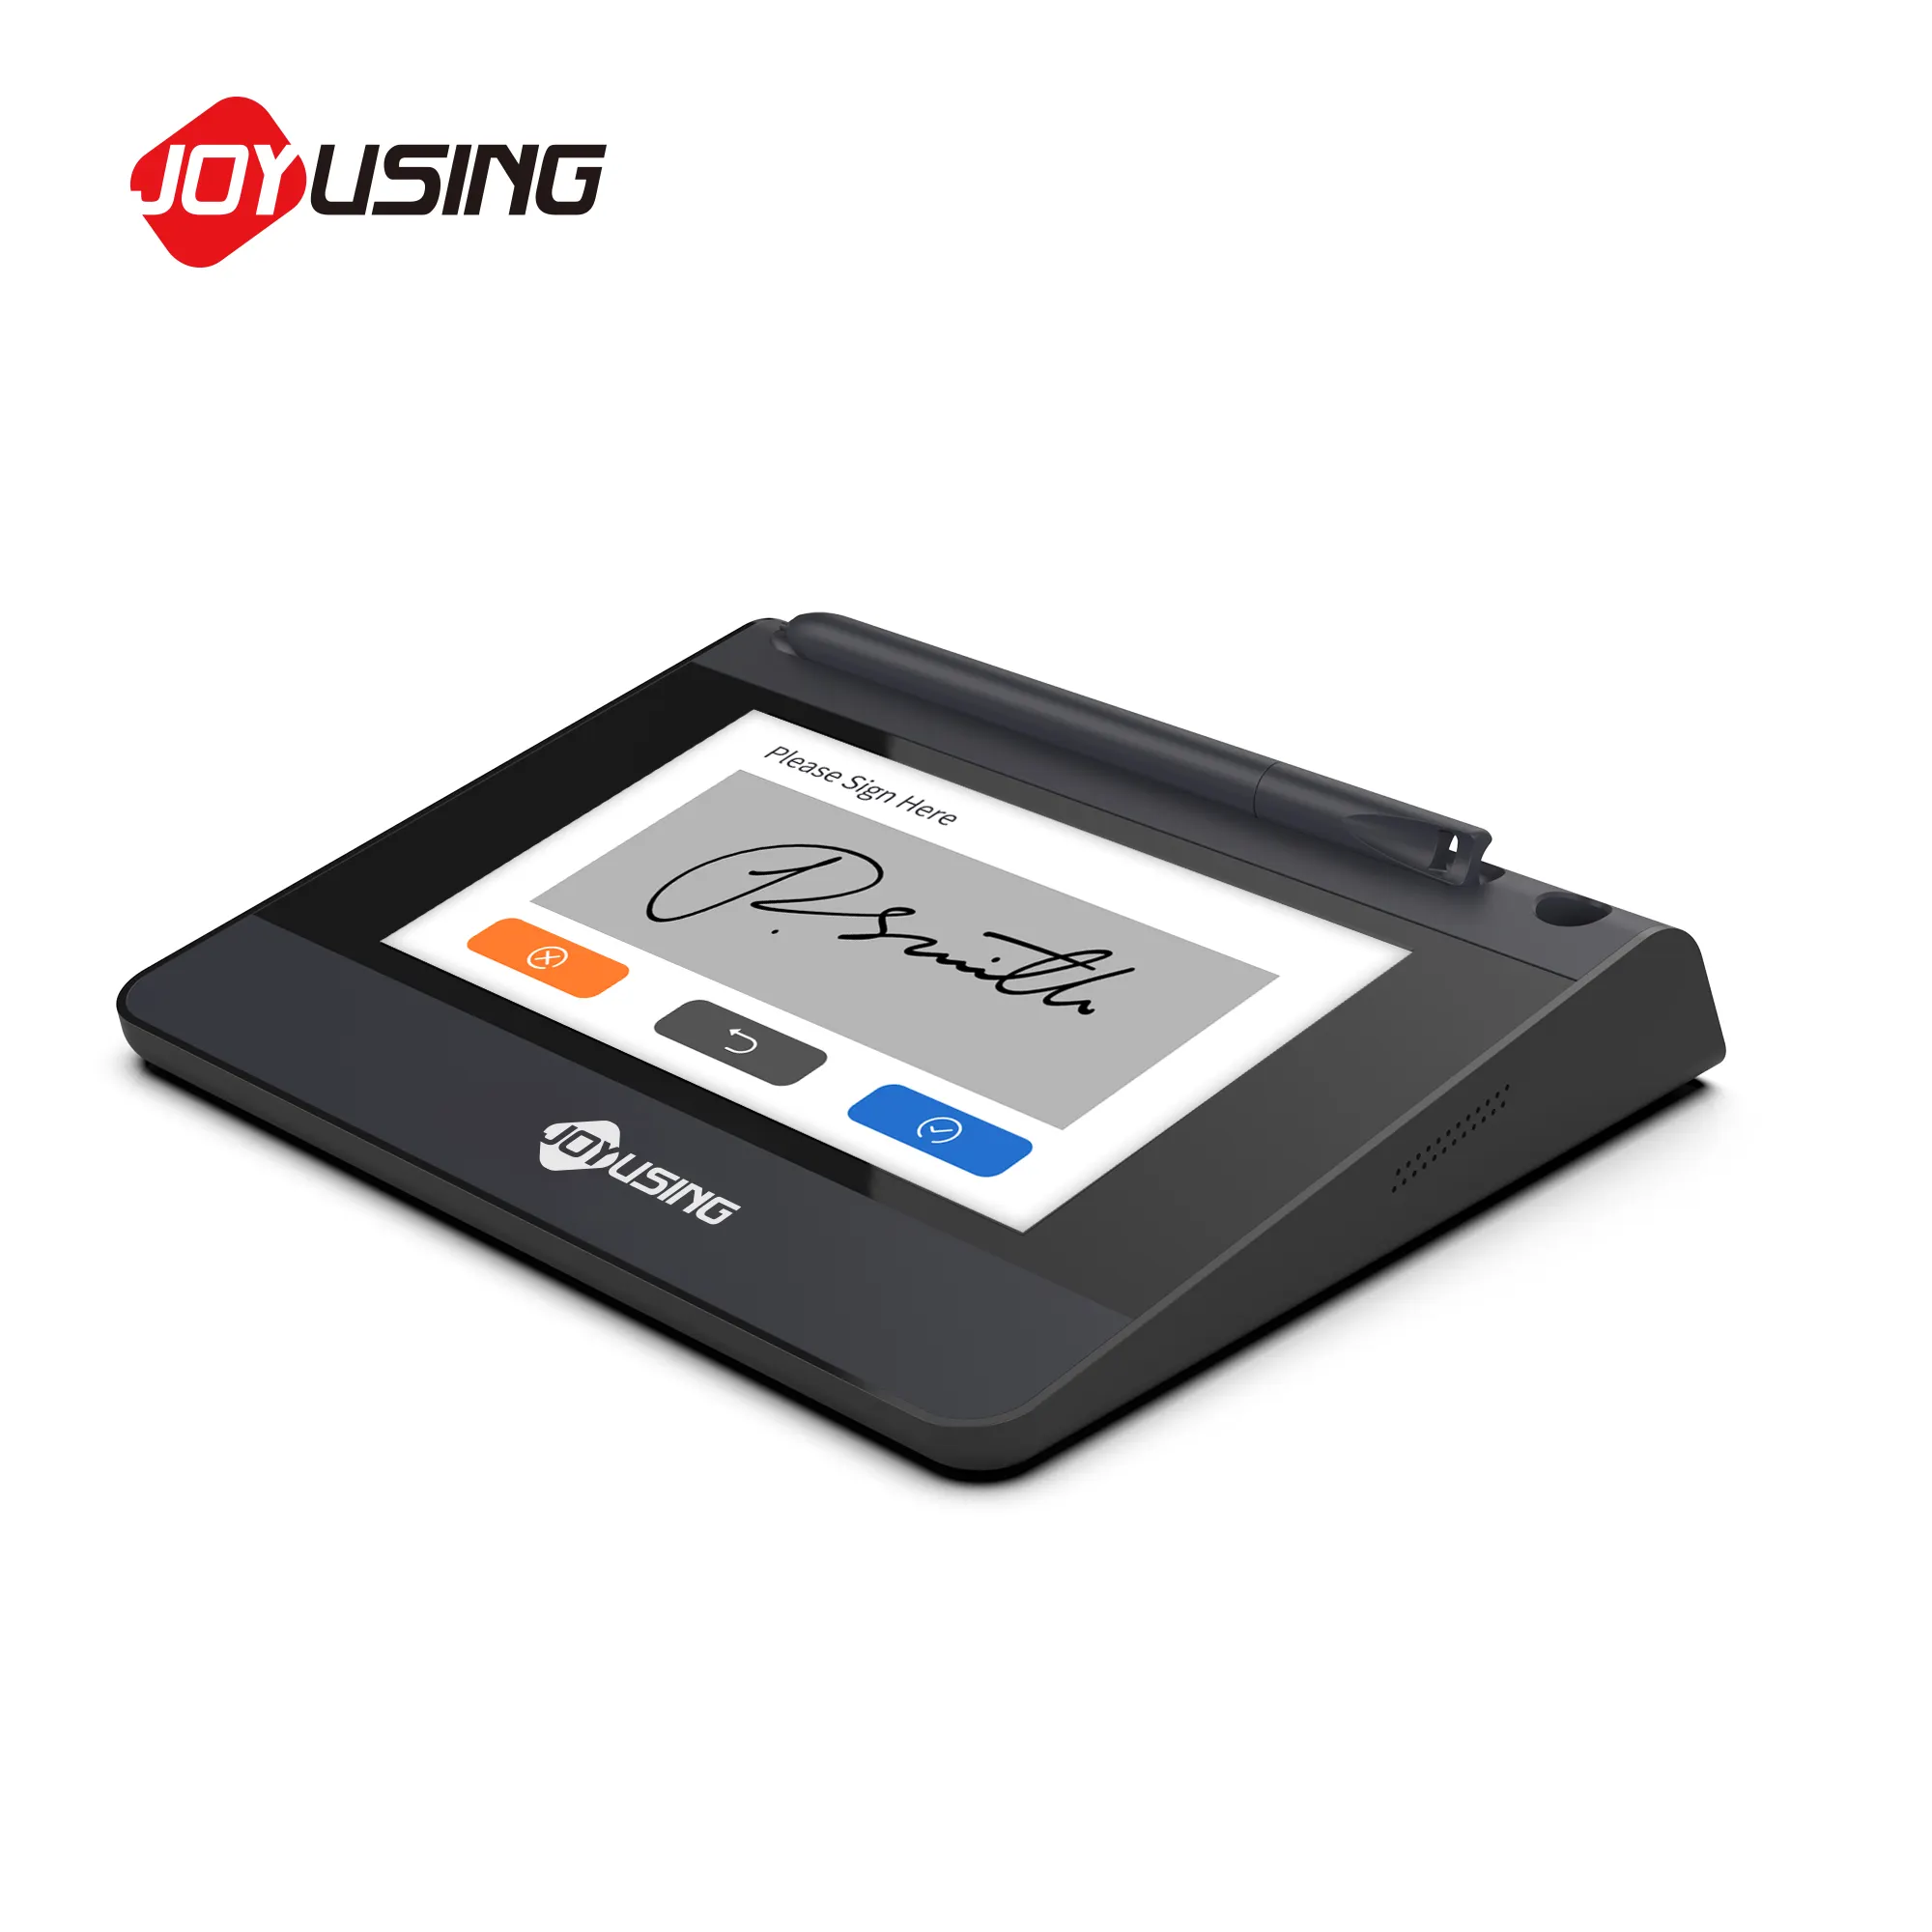 JoyusingSp550電子署名パッドポータブルOem多目的ID検証用の高品質の安価なライティングパッド